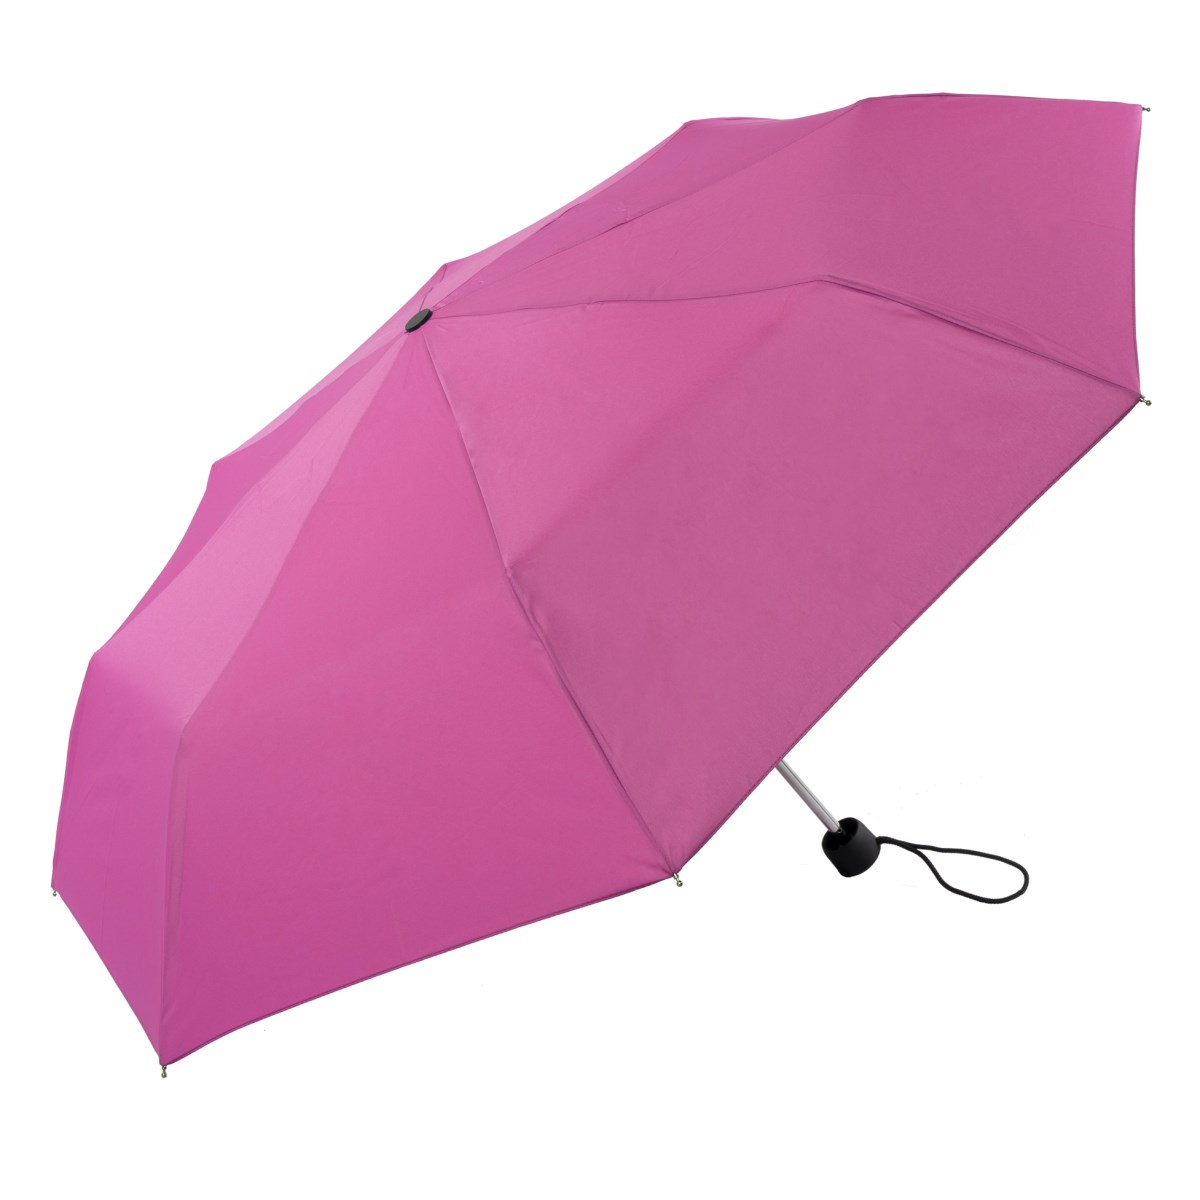 Ladies UU188 Suppermini Umbrella By Drizzles Retail Price £3.99